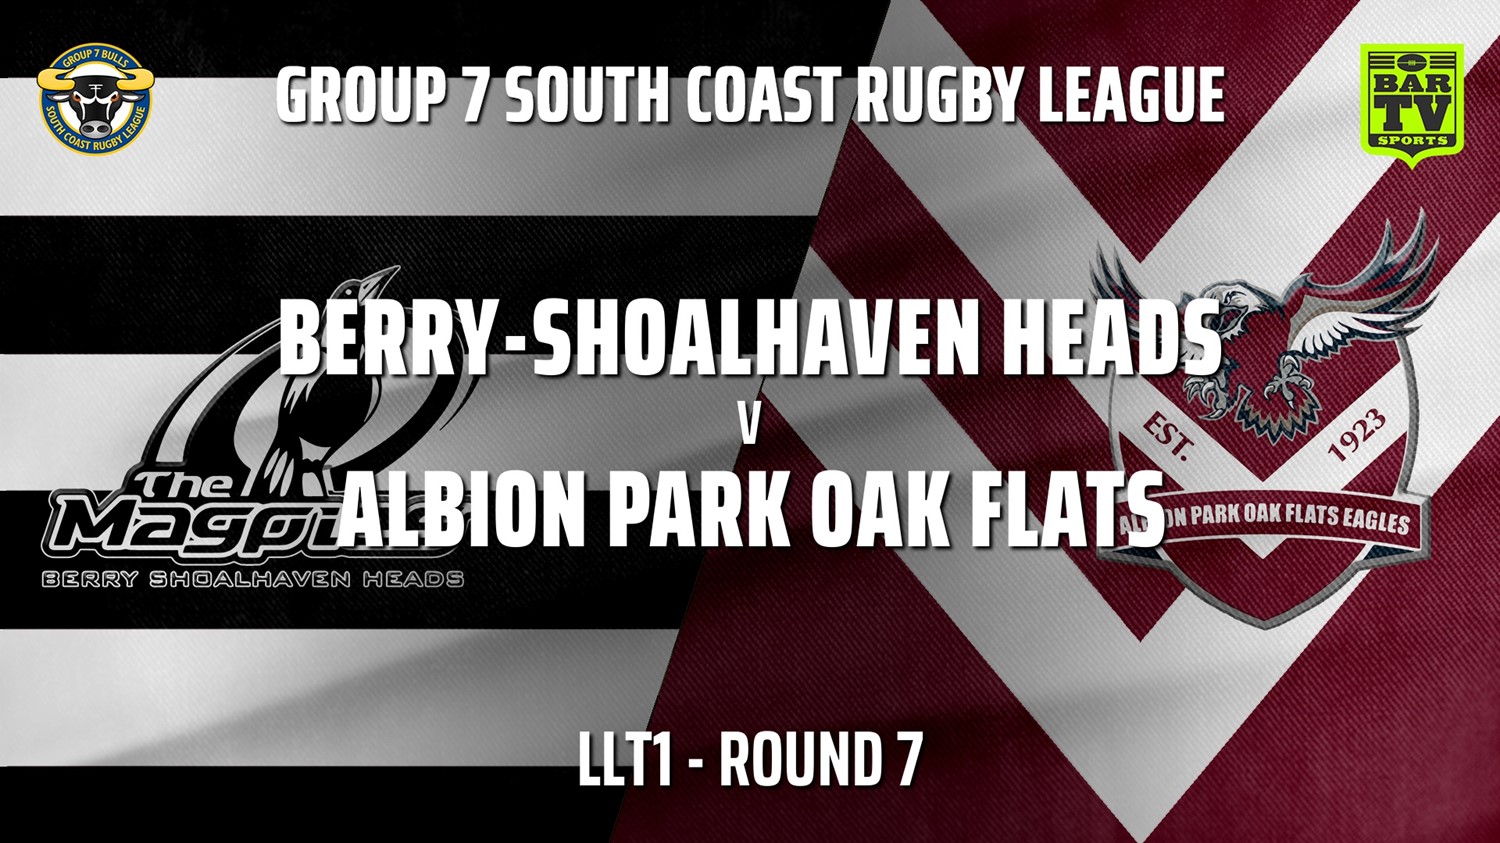 210529-Group 7 RL Round 7 - LLT1 - Berry-Shoalhaven Heads v Albion Park Oak Flats Slate Image